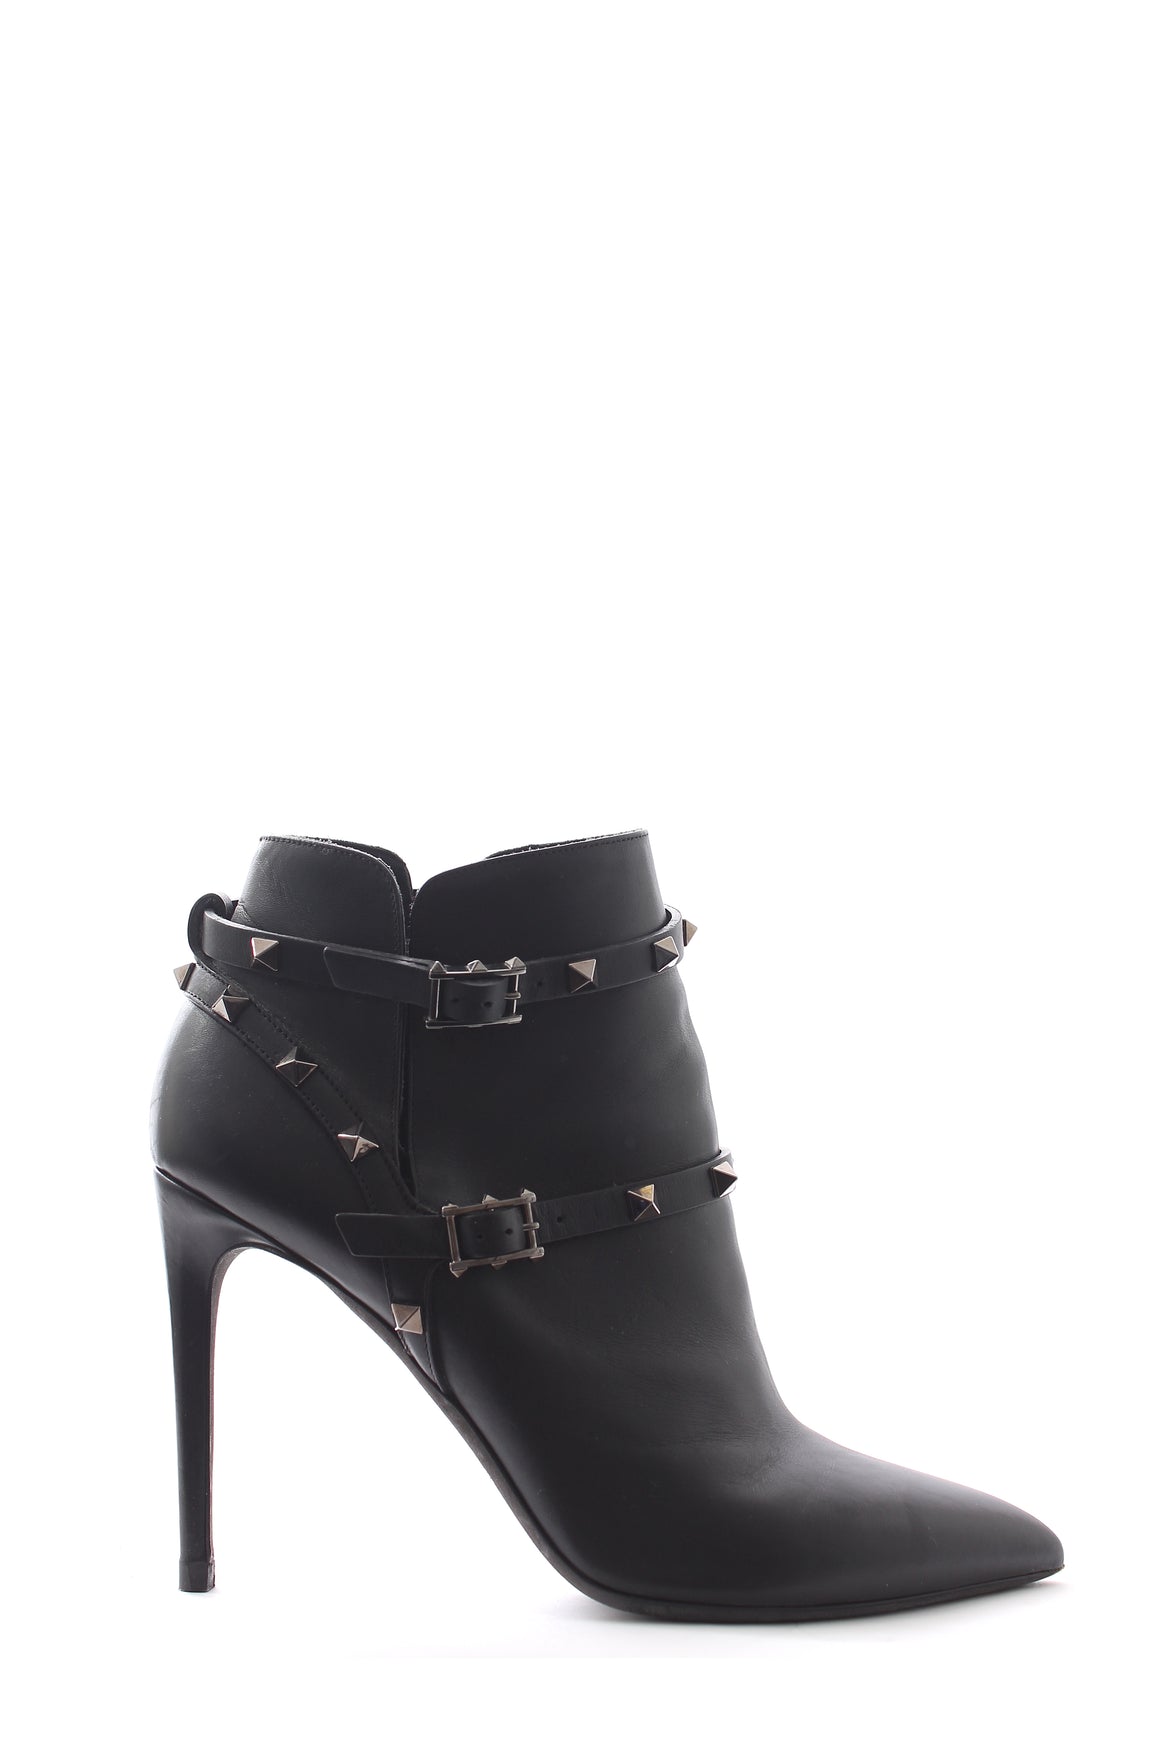 Valentino Garavani Noir Rockstud Leather Ankle Boots